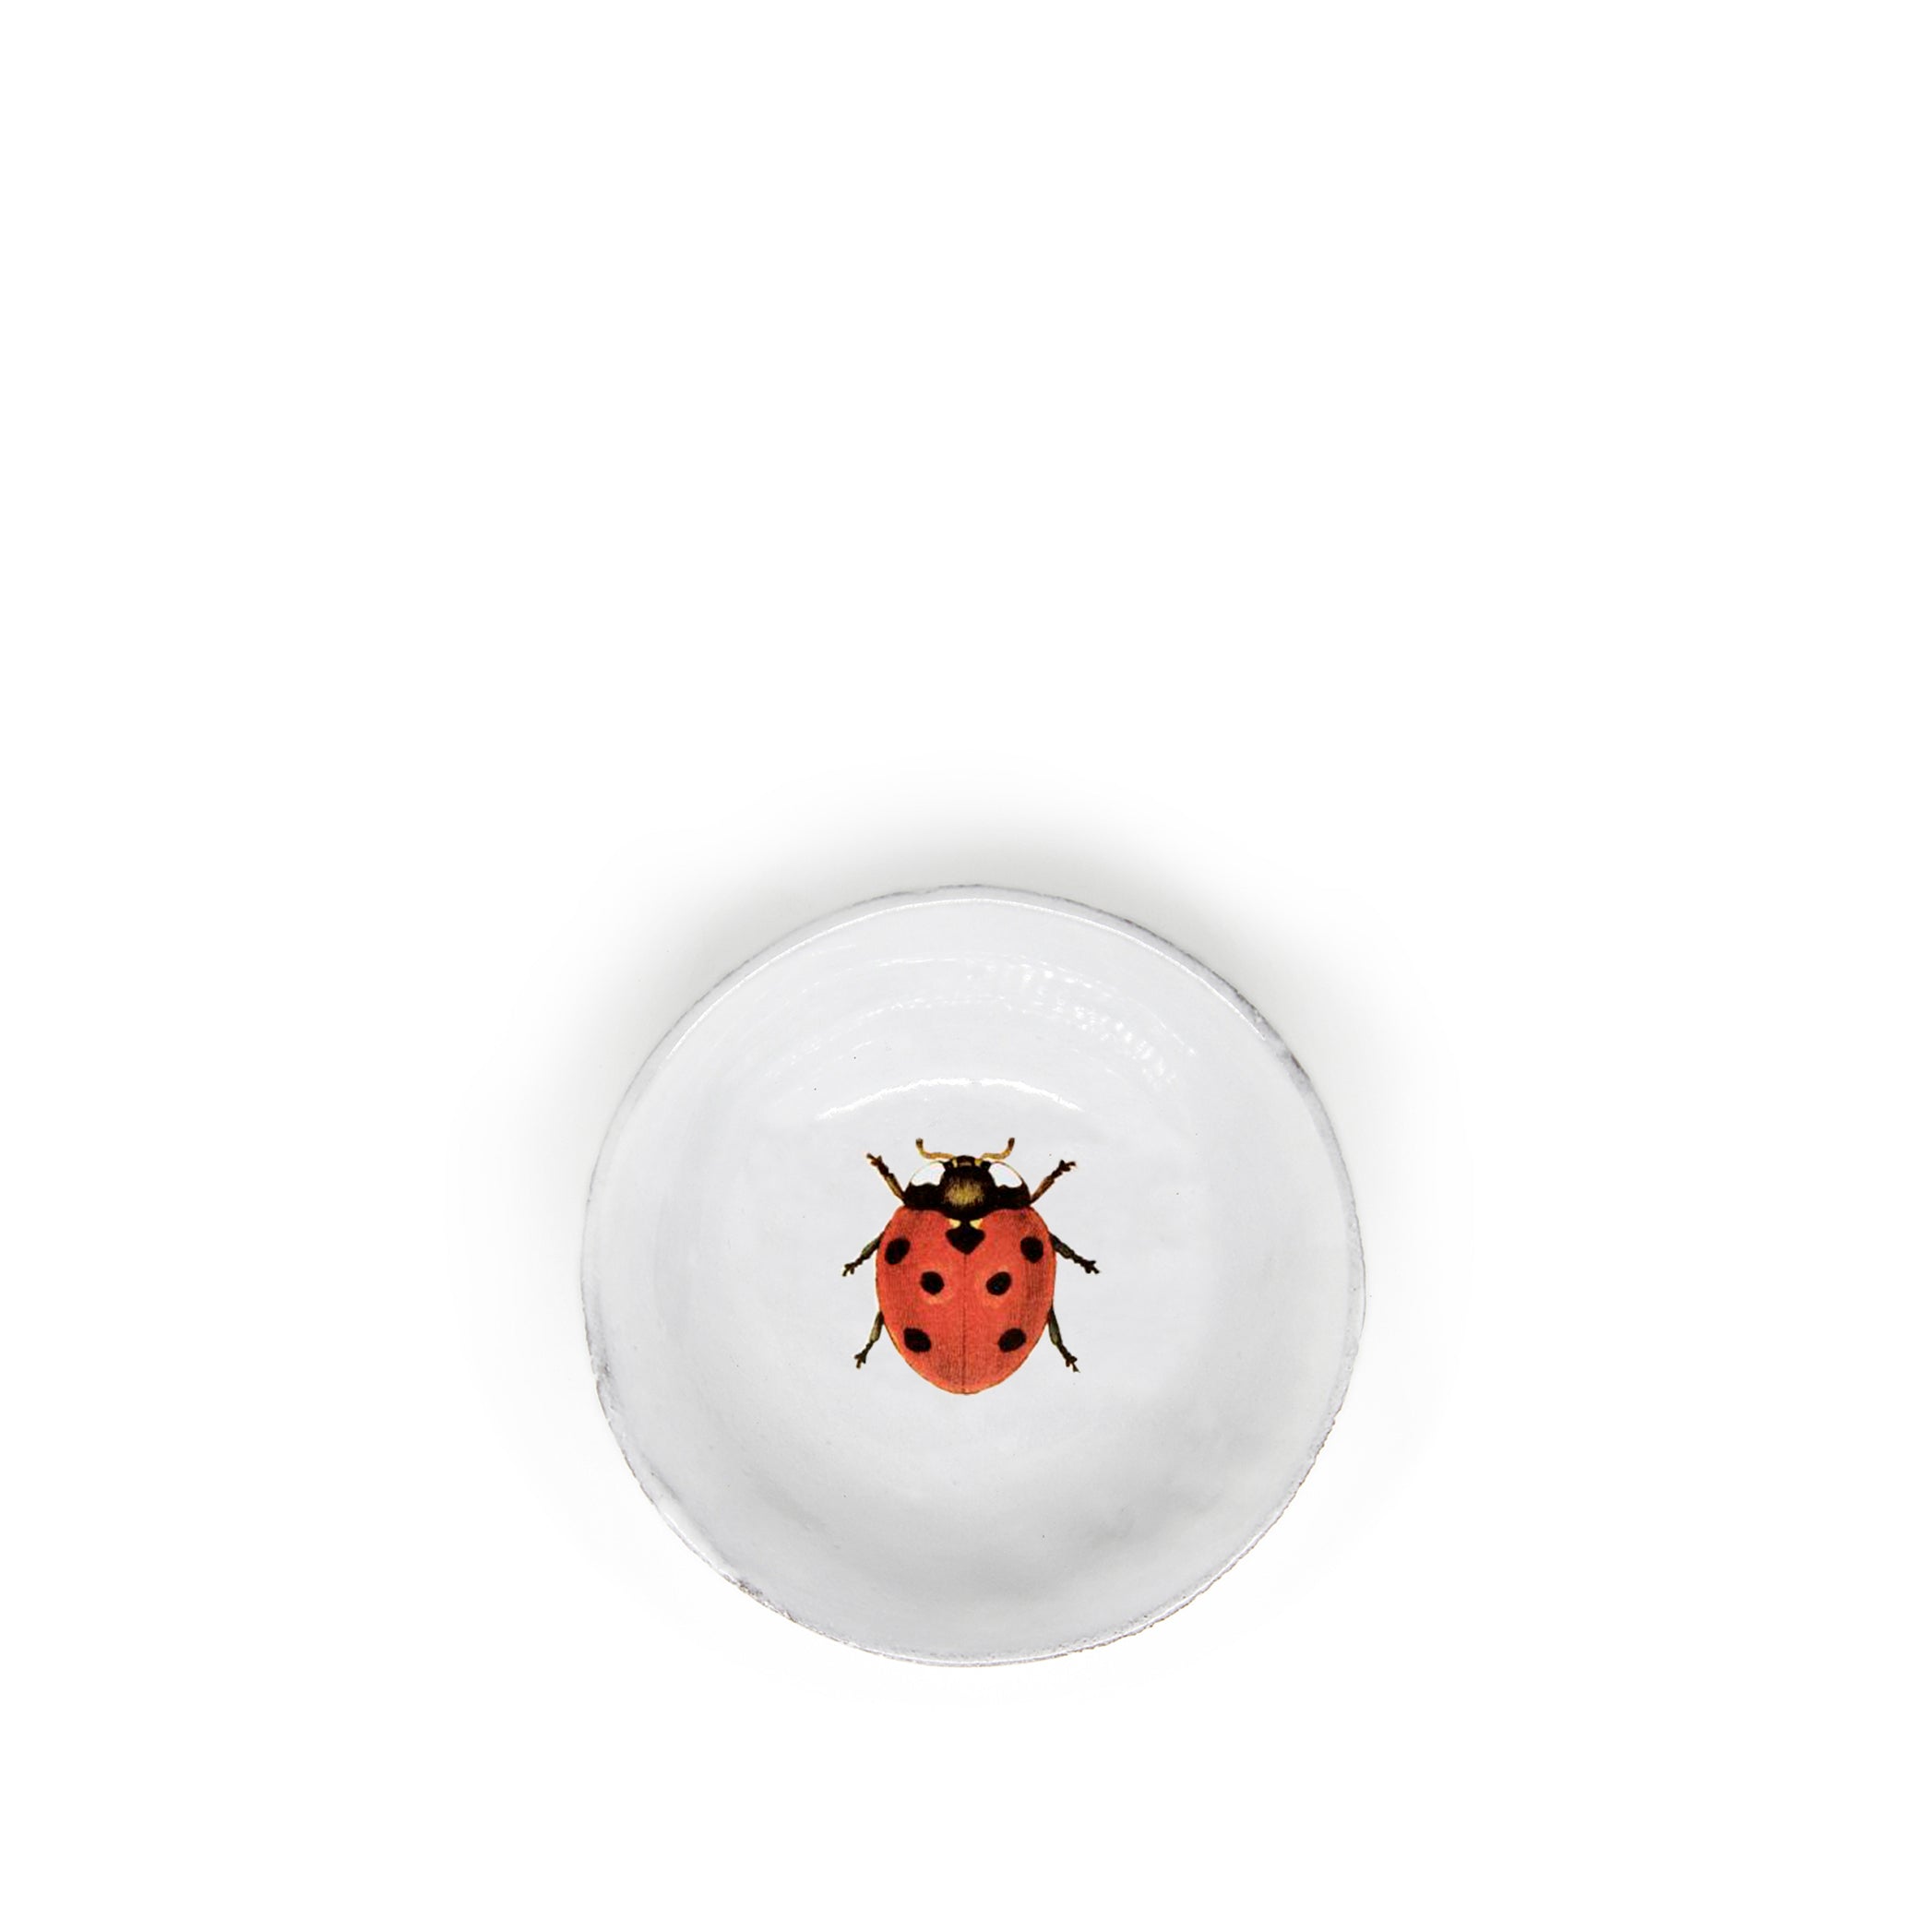 Ladybird Soup Bowl by Astier de Villatte, 14.5cm